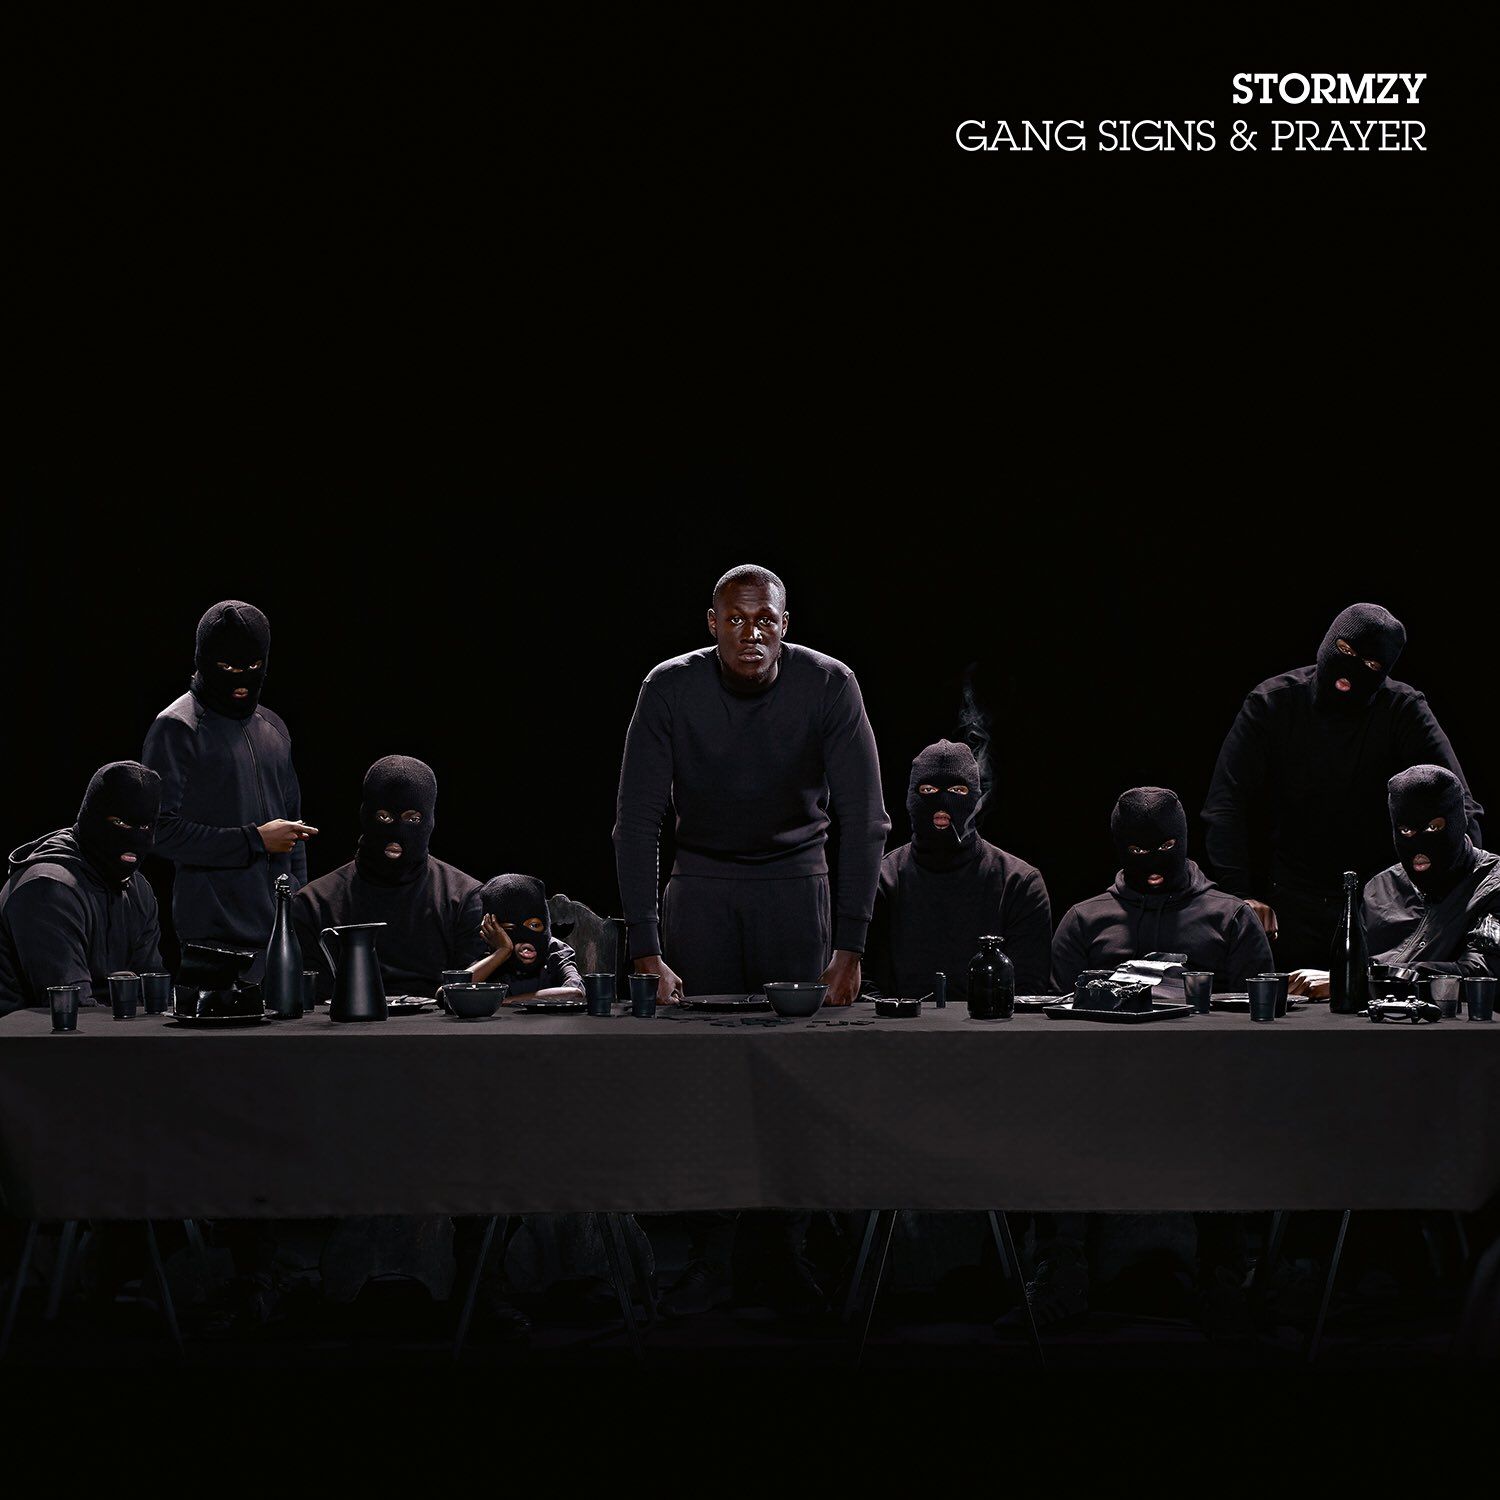 Stormzy unveils debut album artwork and title